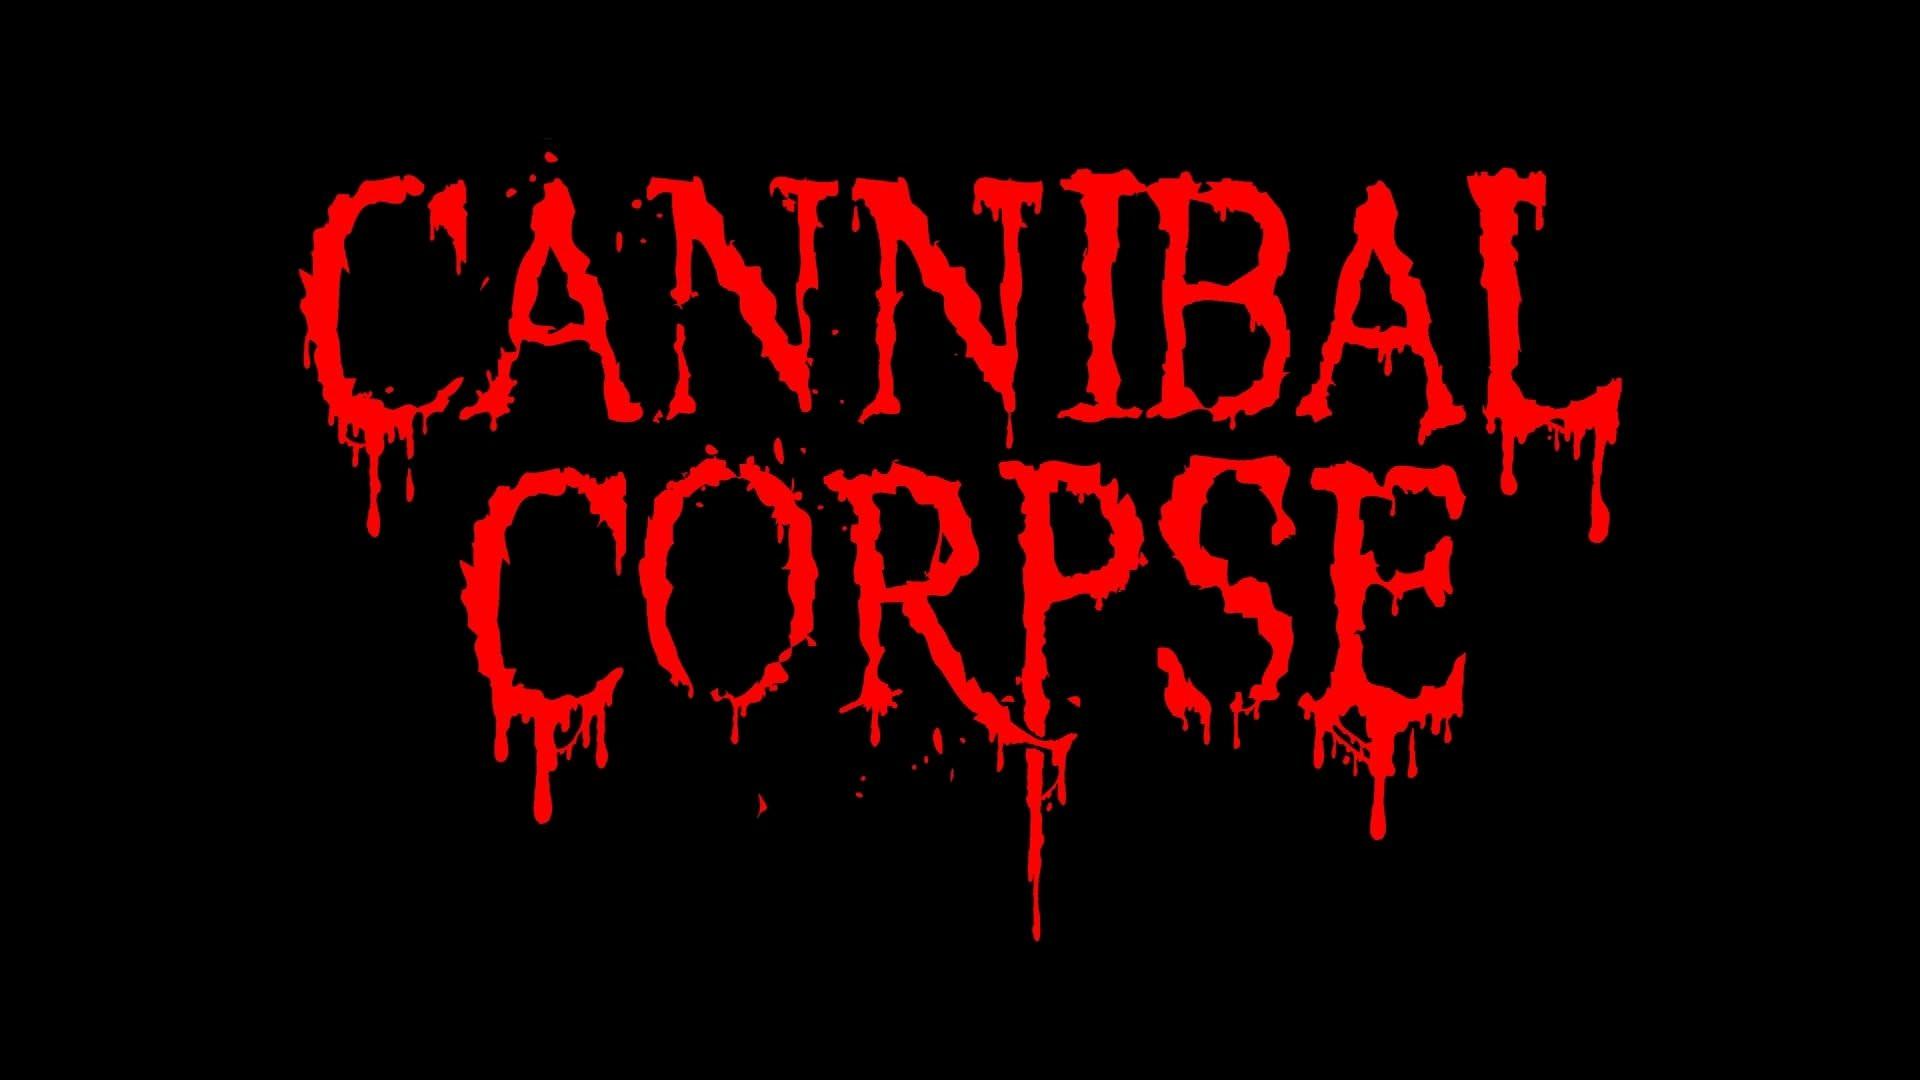 Cannibal Corpse wallpaper 1920x1080 Full HD (1080p) desktop background